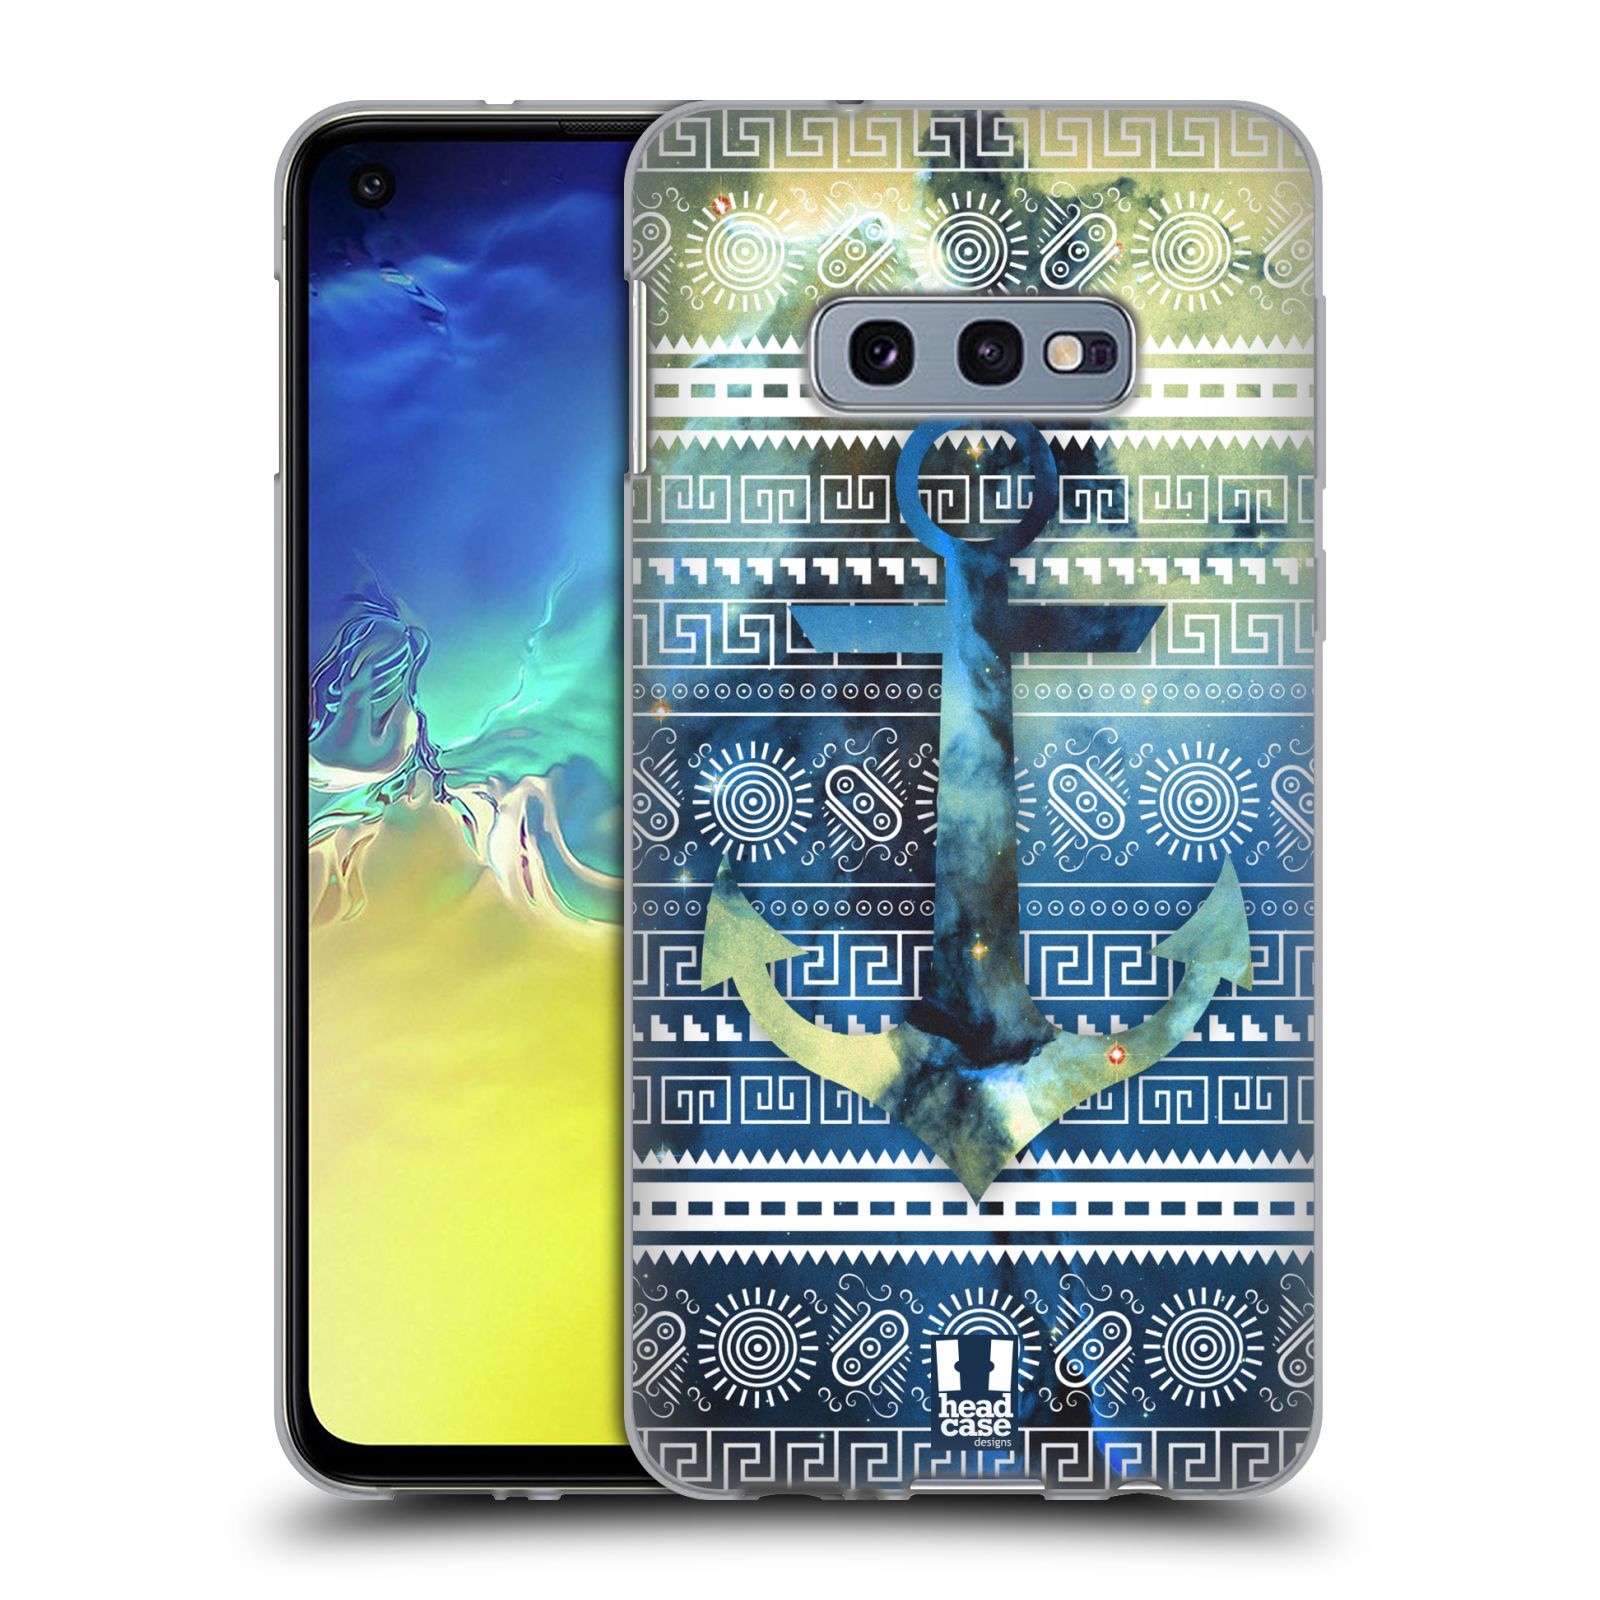 Silikonové pouzdro na mobil Samsung Galaxy S10e - Head Case - NEBULA KOTVA (Silikonový kryt, obal, pouzdro na mobilní telefon Samsung Galaxy S10e SM-G970 s motivem NEBULA KOTVA)